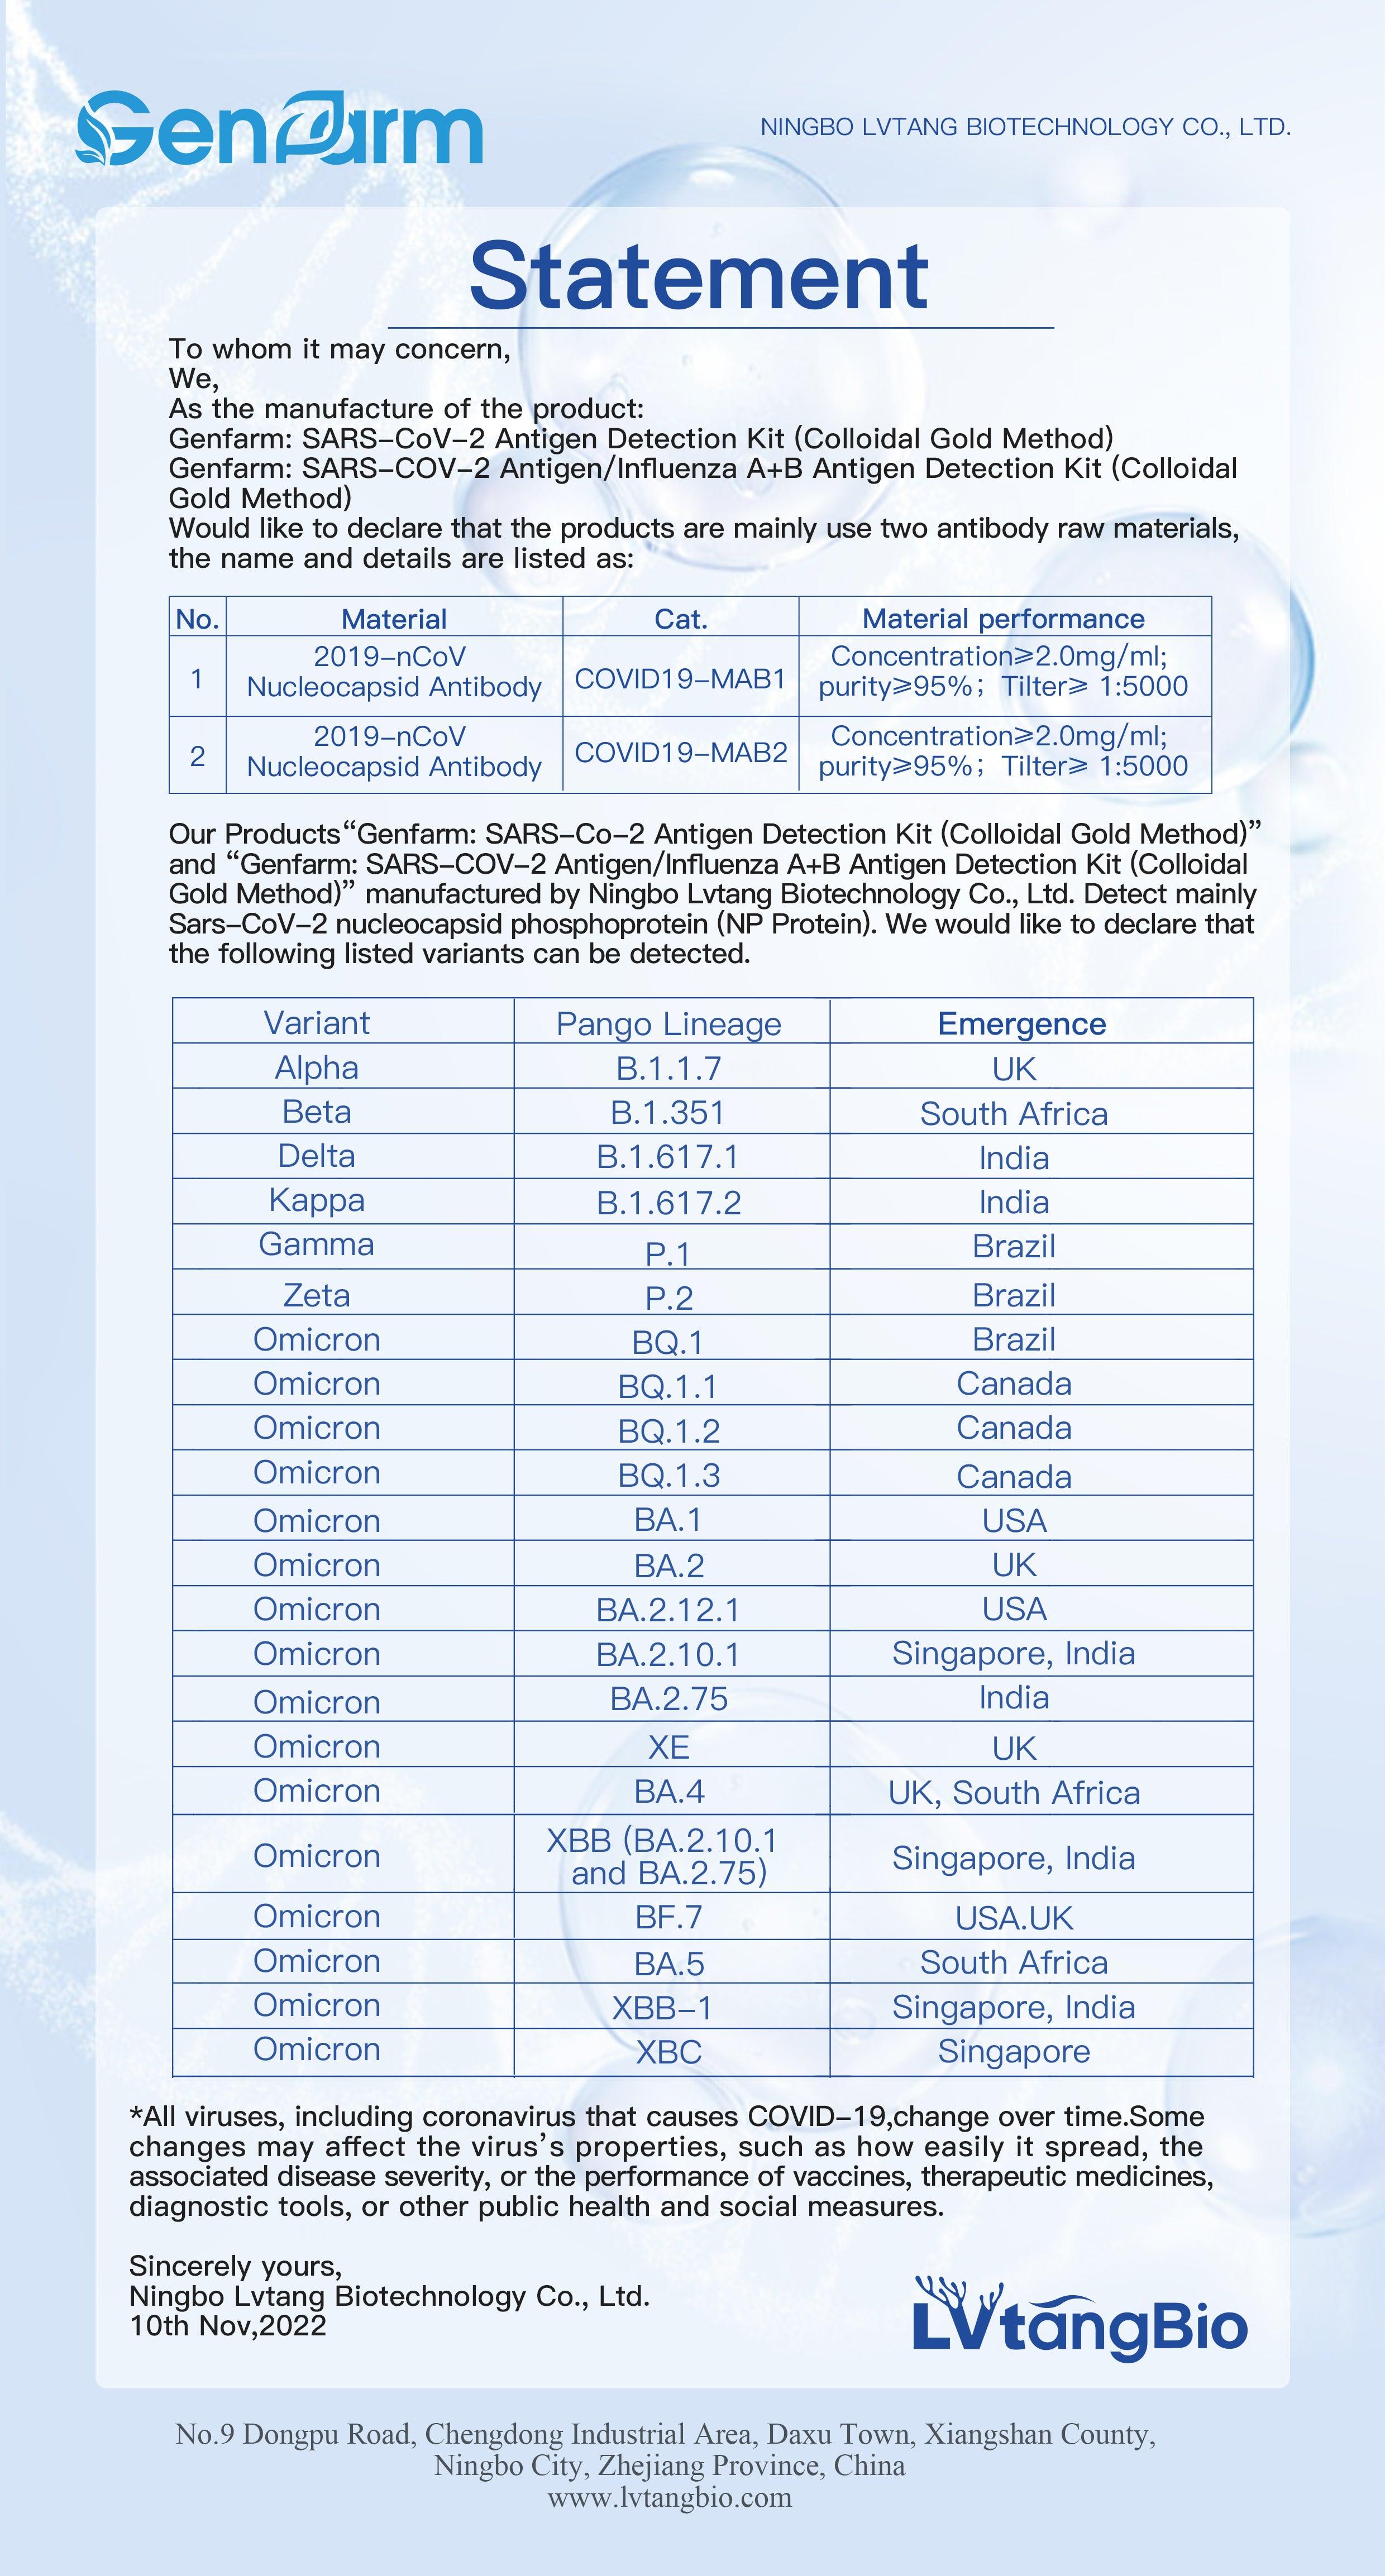 Genfarm (SARS-COV-2) Antigen/Influenza A+B Detection Kit - Layton Health